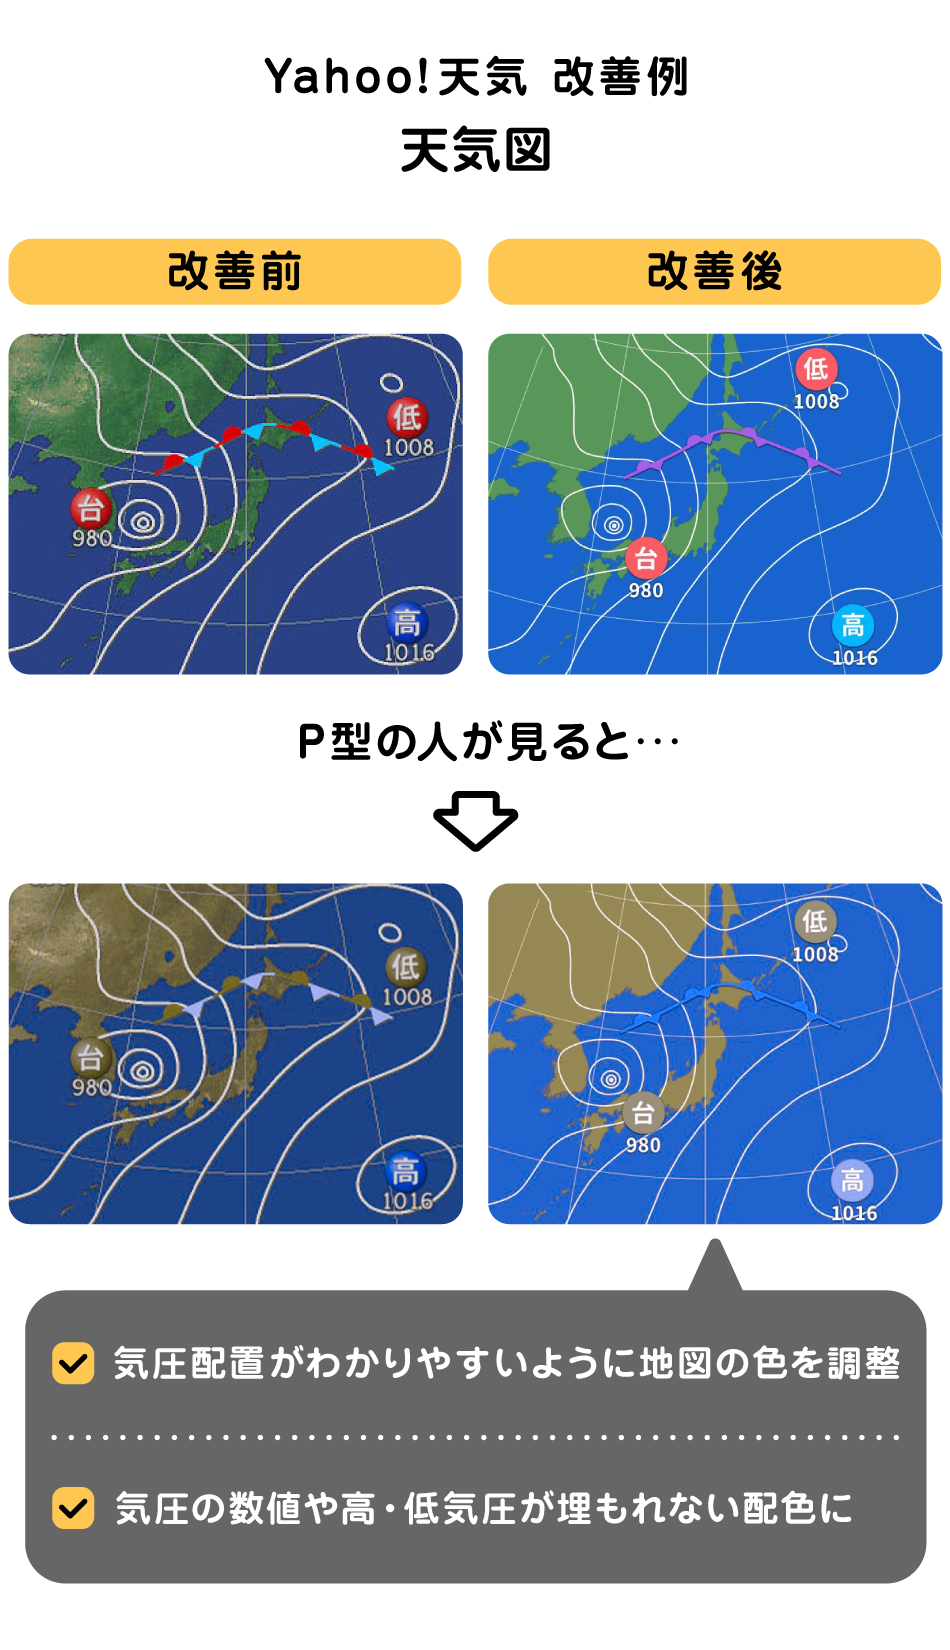 Yahoo!天気の天気図の改善例。改善前の天気図と改善後の天気図を横に並べて比較している。加えてP型の色覚特性のシミュレーションの図をその下に並べている。